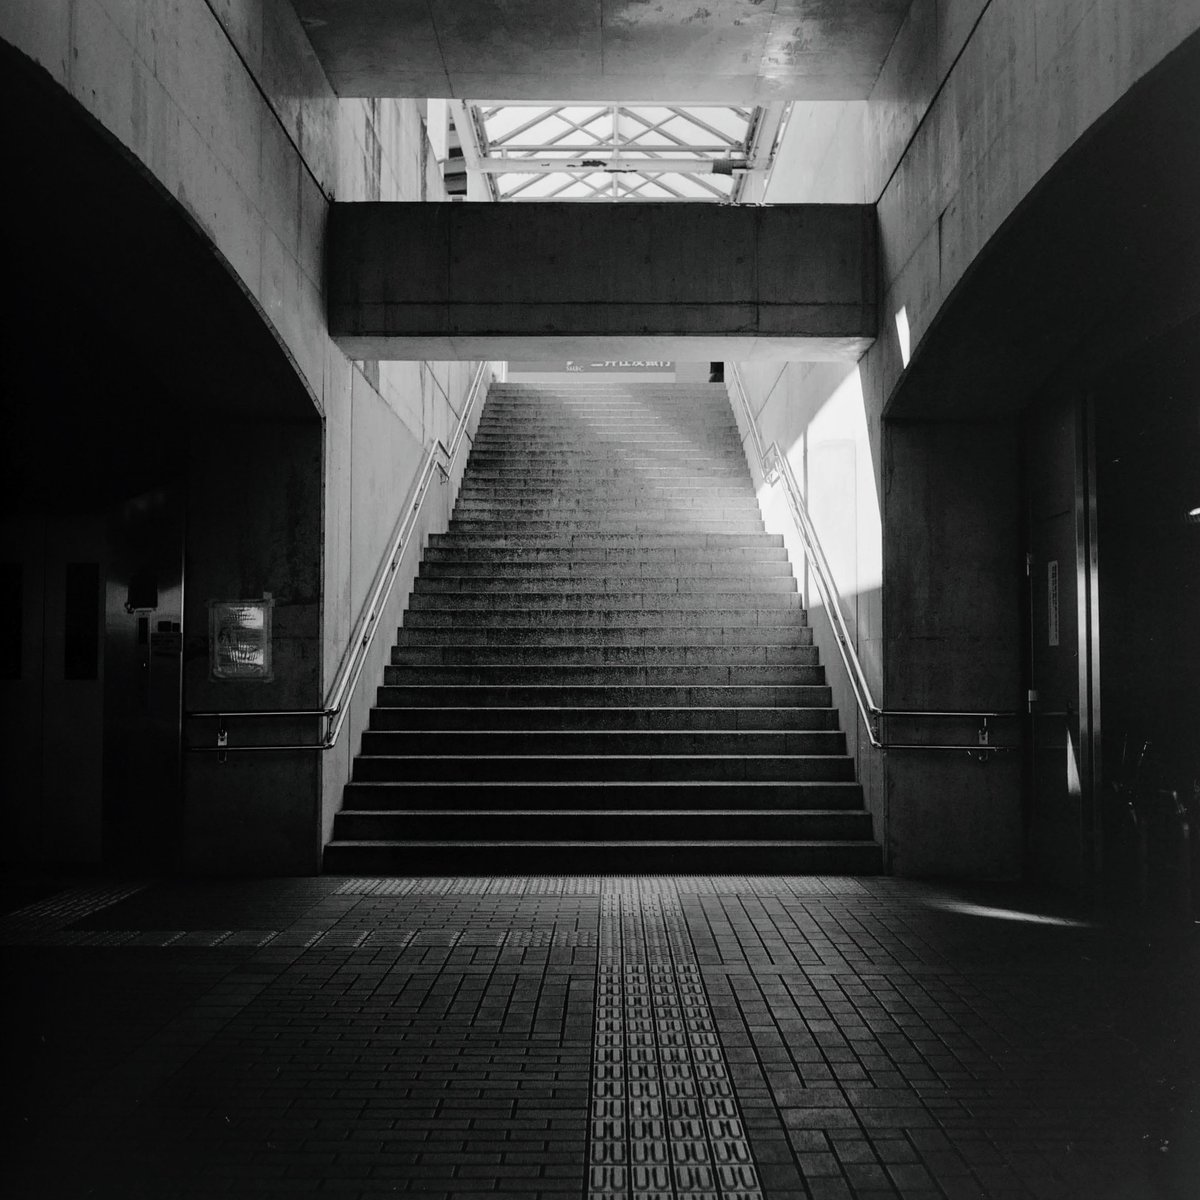 Stairs

#filmcamera
#filmphotography
#フィルムカメラ
#フィルム写真
#rolleicordvb
#ilfordfp4+
#bnw #白黒写真